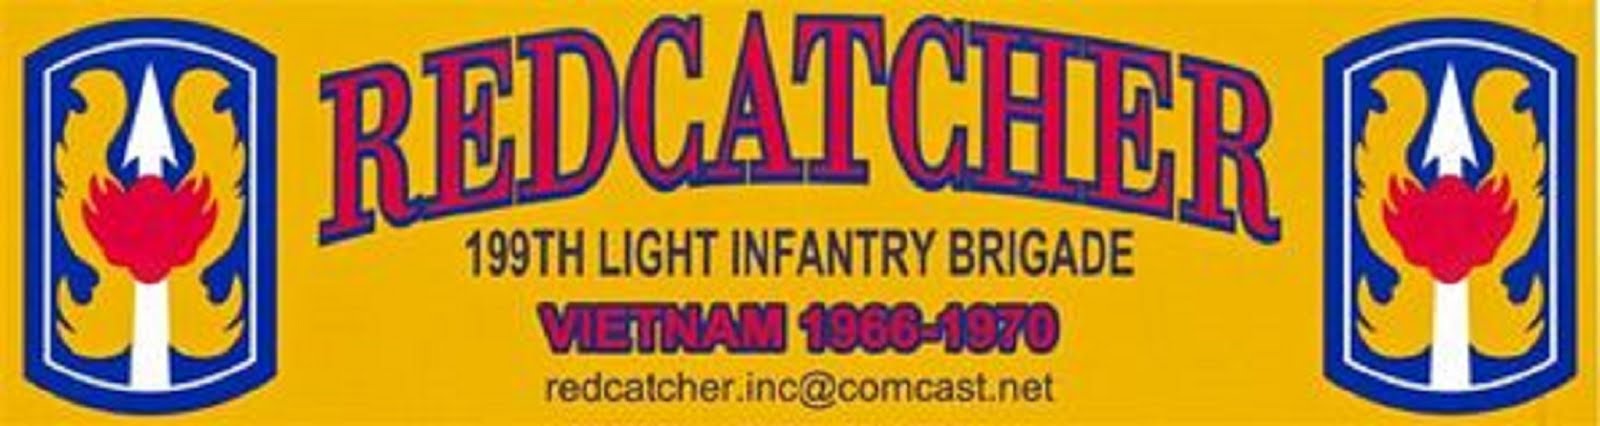 199th LIGHT INFANTRY BRIGADE - REDCATCHER